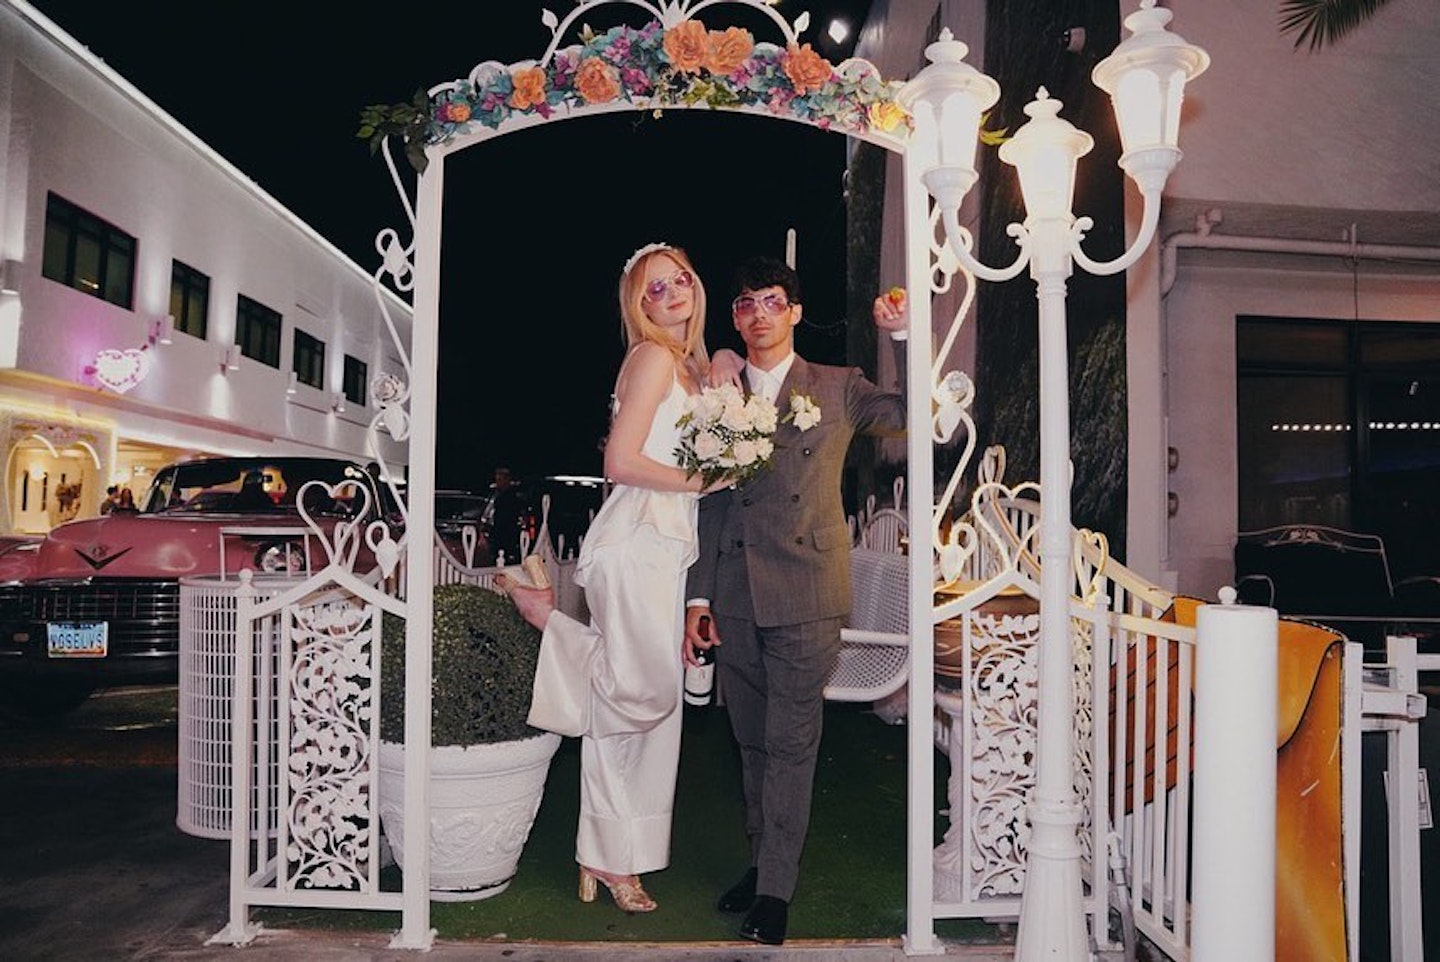 Sophie Turner and Joe Jonas on their wedding day 